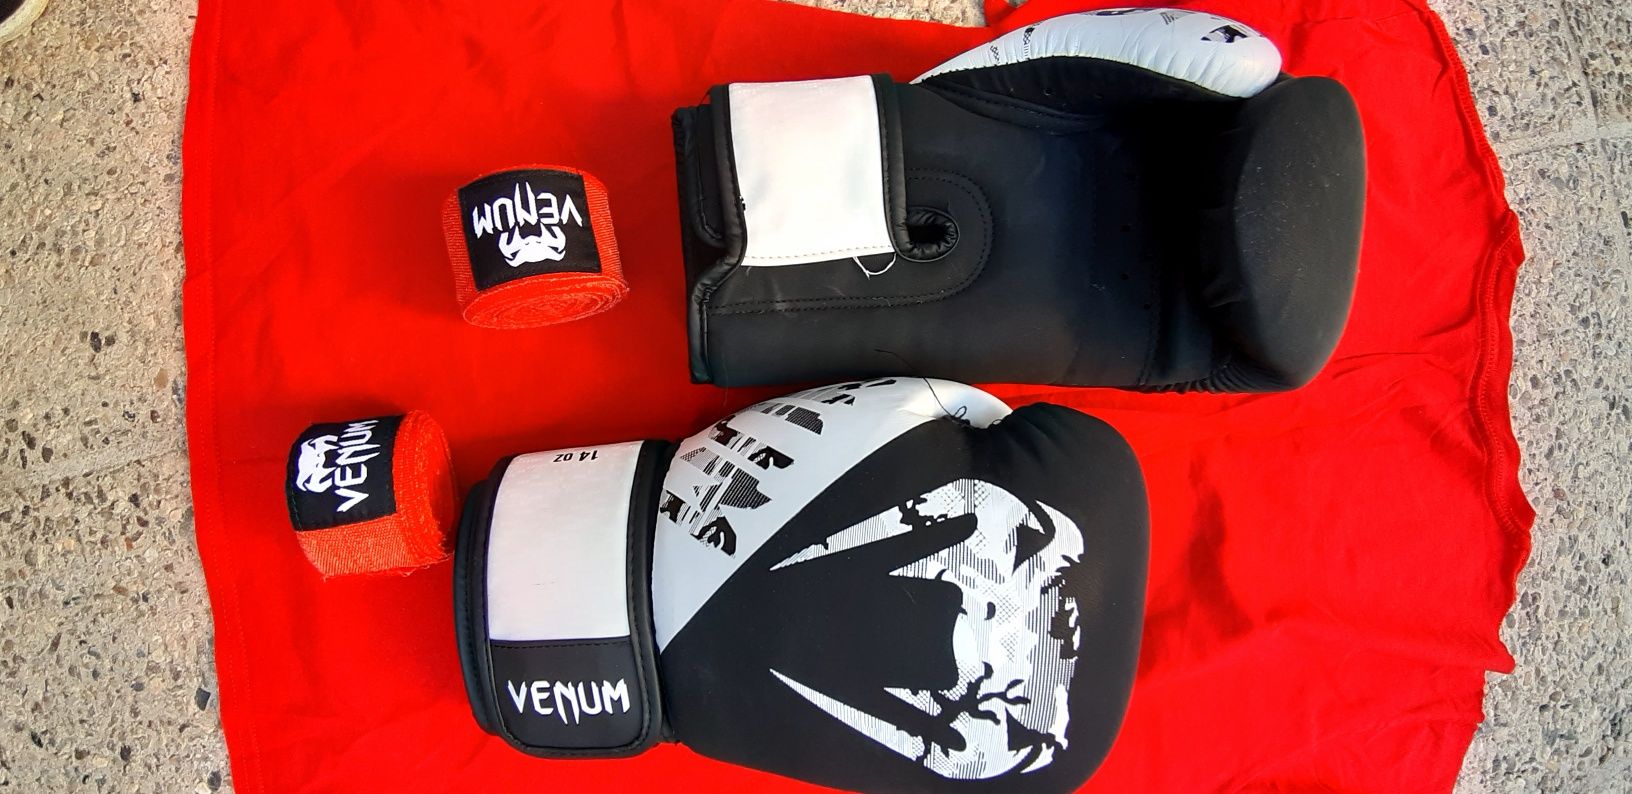 Mănuși Venum LEGACY BOXING GLOVES 14 oz box kickboxing Muay Thai